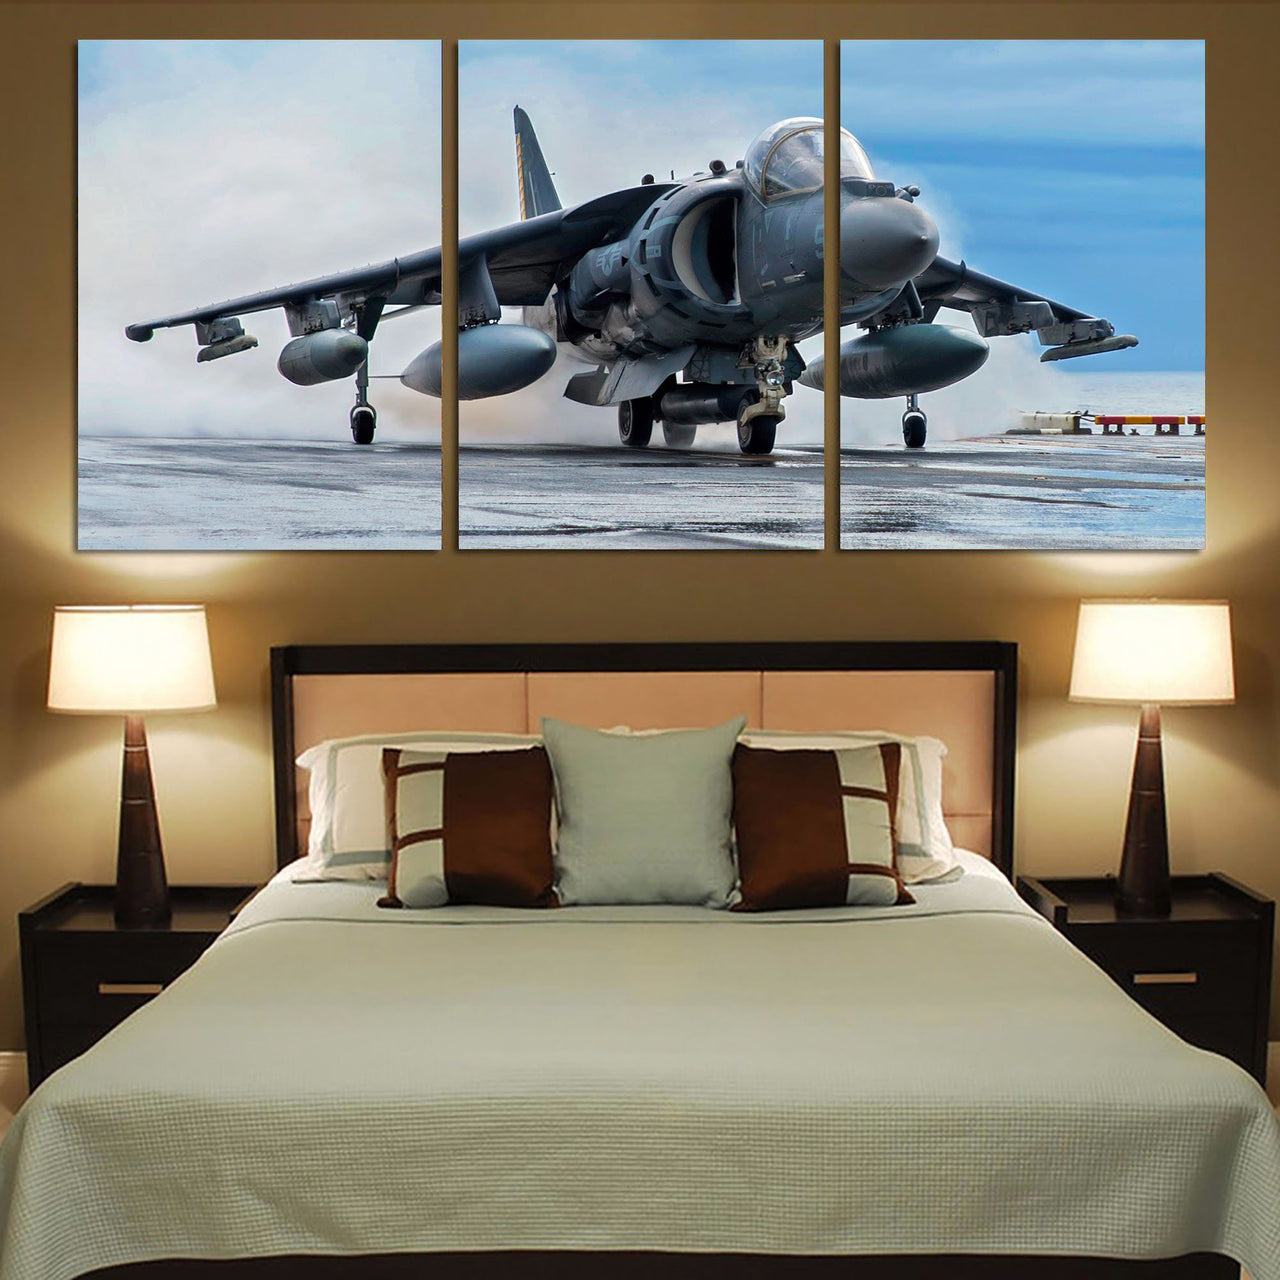 McDonnell Douglas AV-8B Harrier II Printed Canvas Posters (3 Pieces) Aviation Shop 